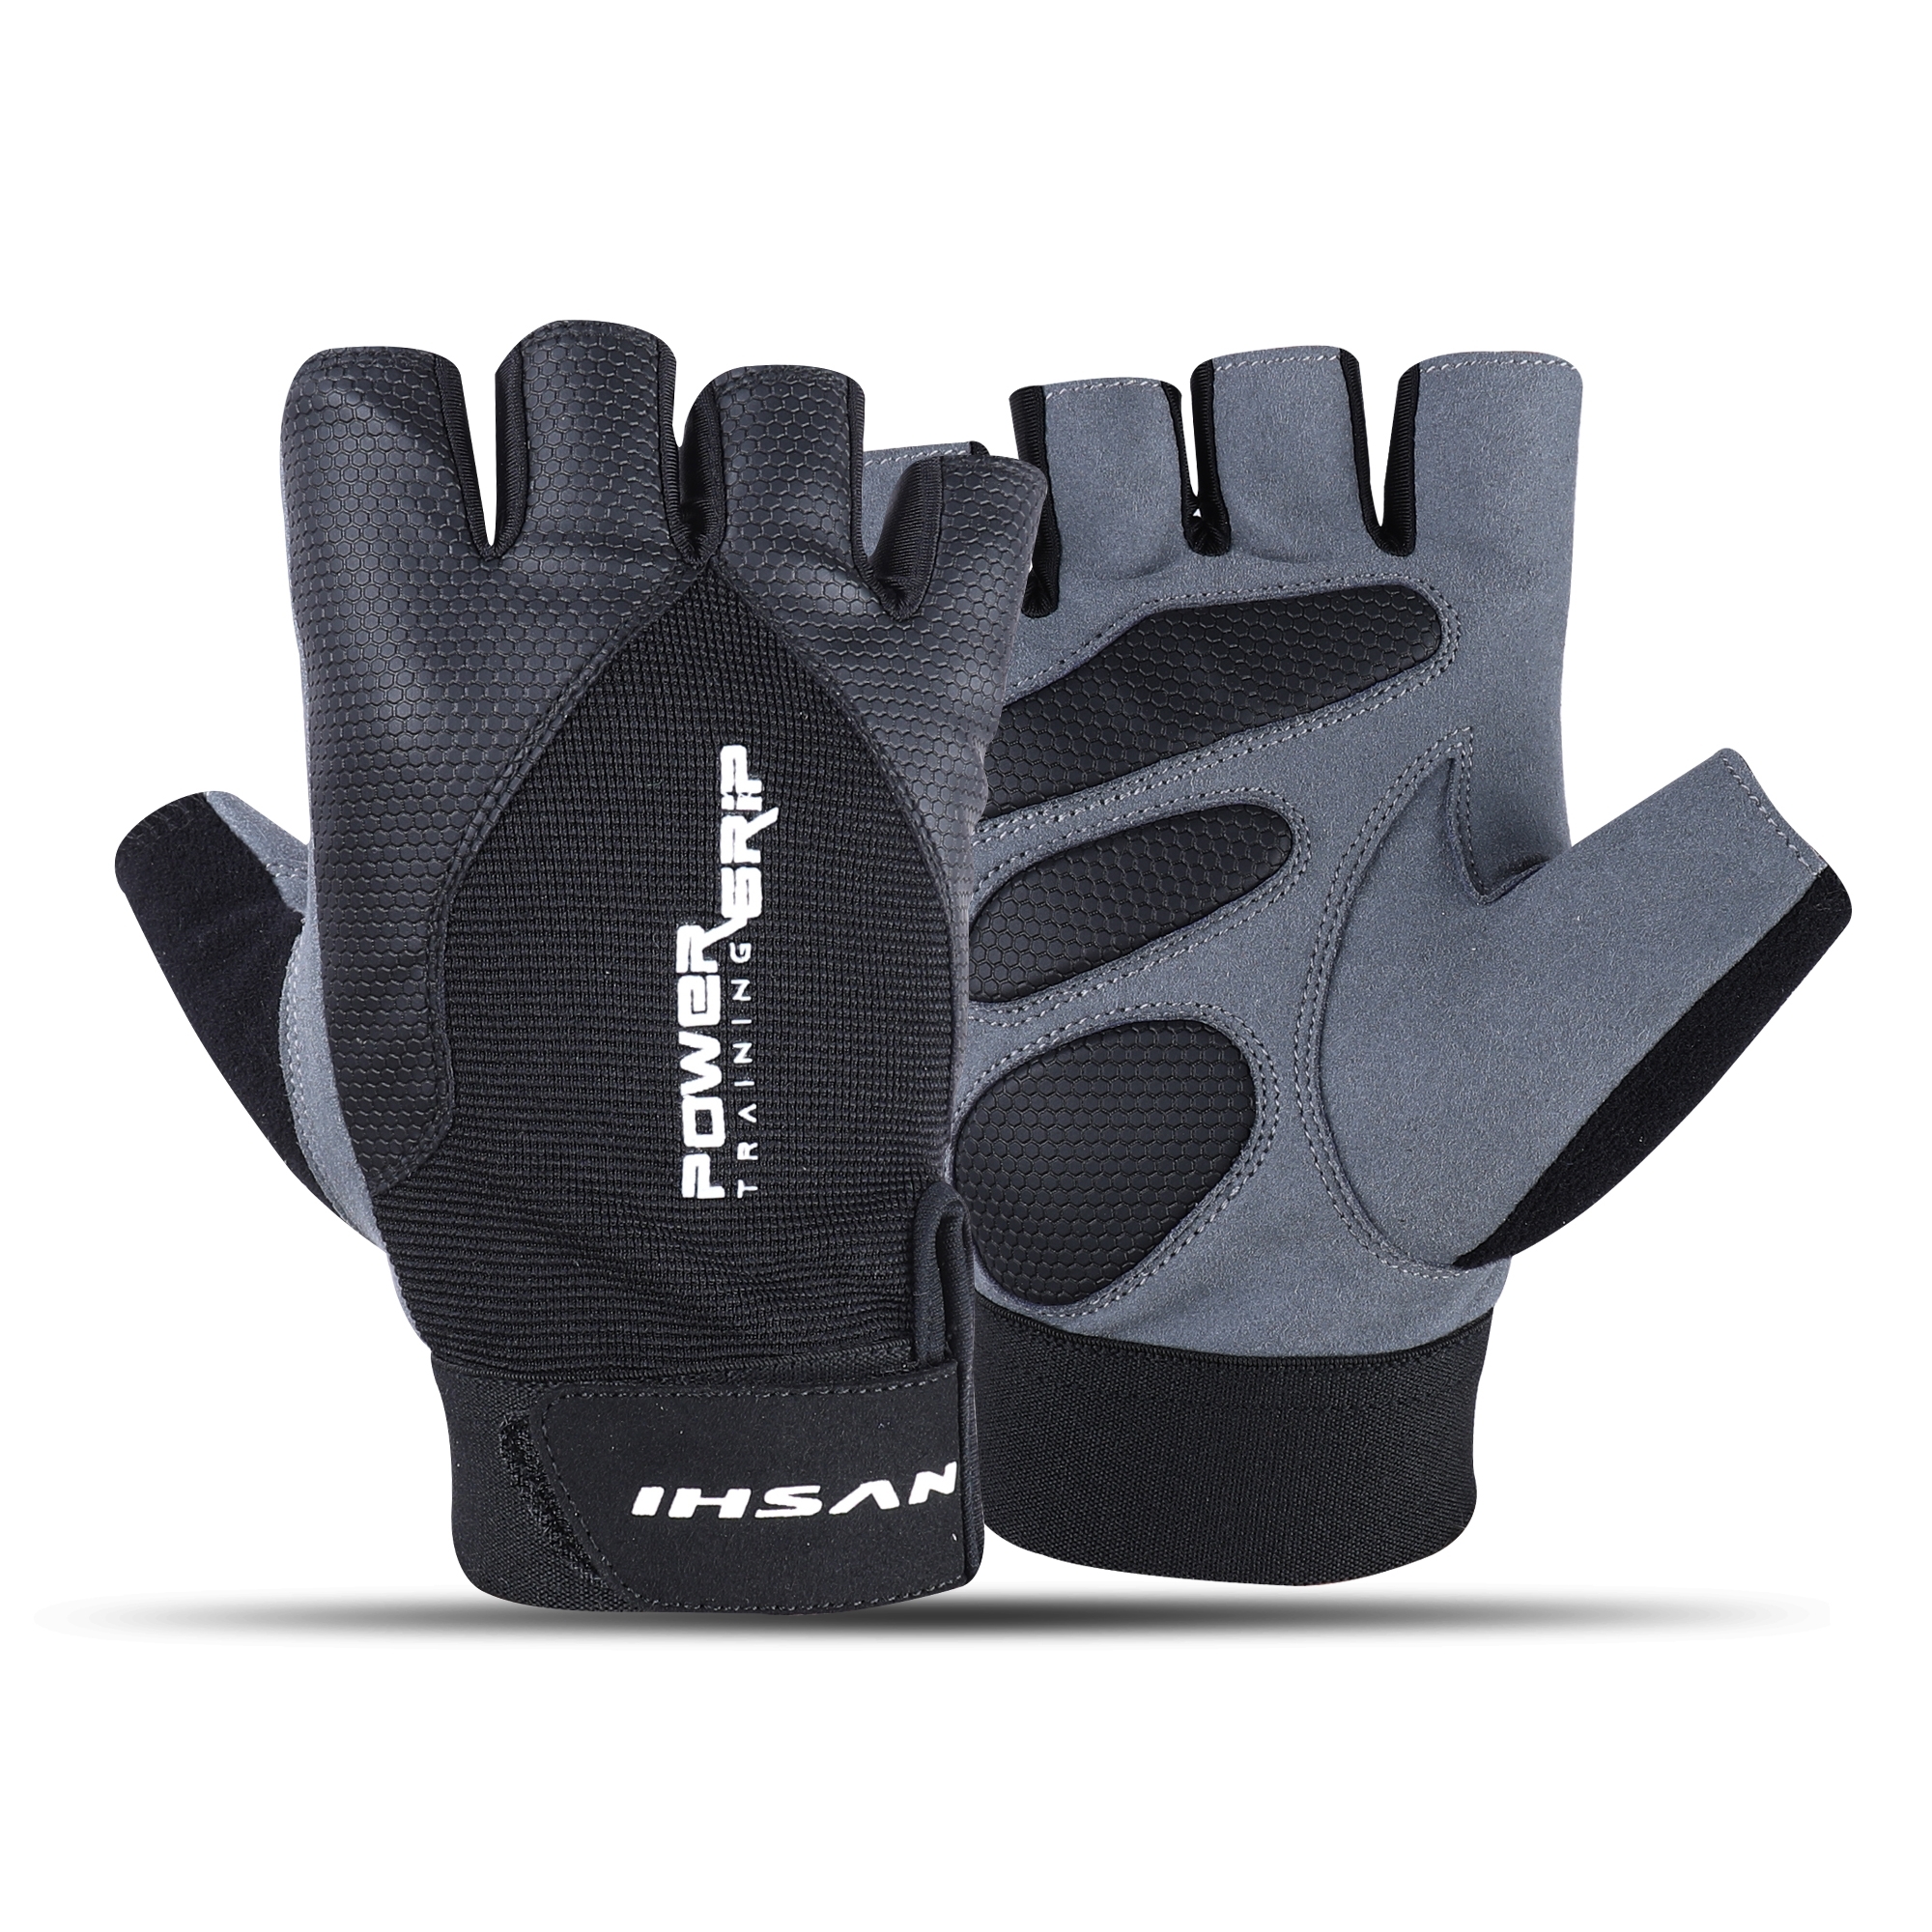 Gym training Gloves